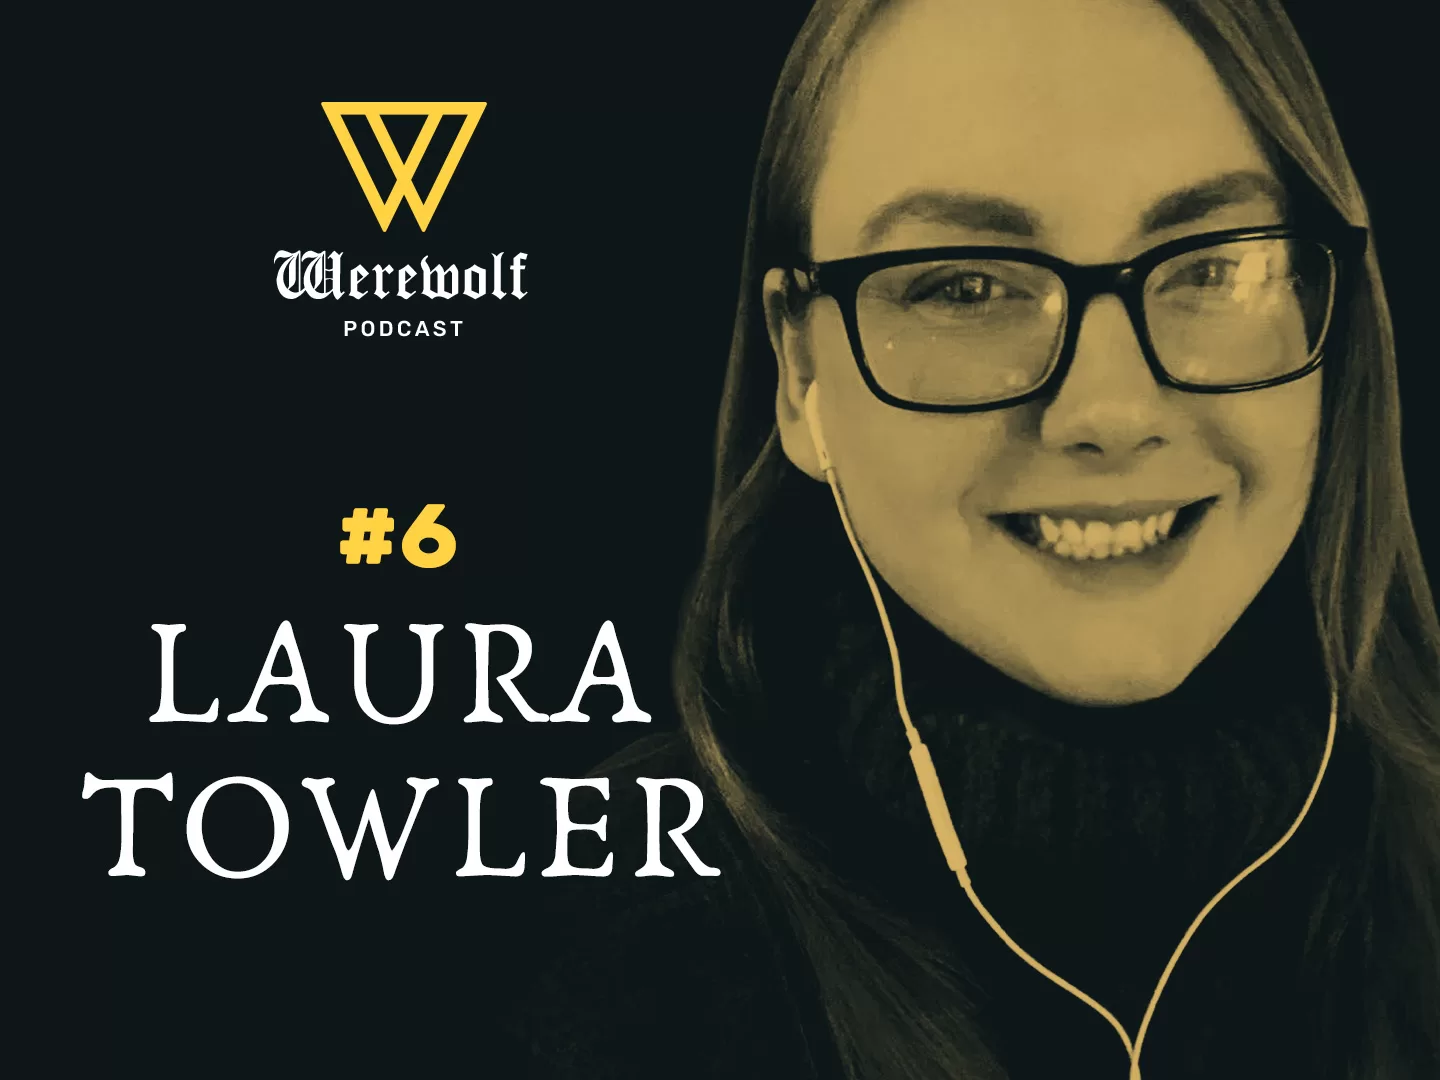 Werewolf Podcast #6: Laura Towler